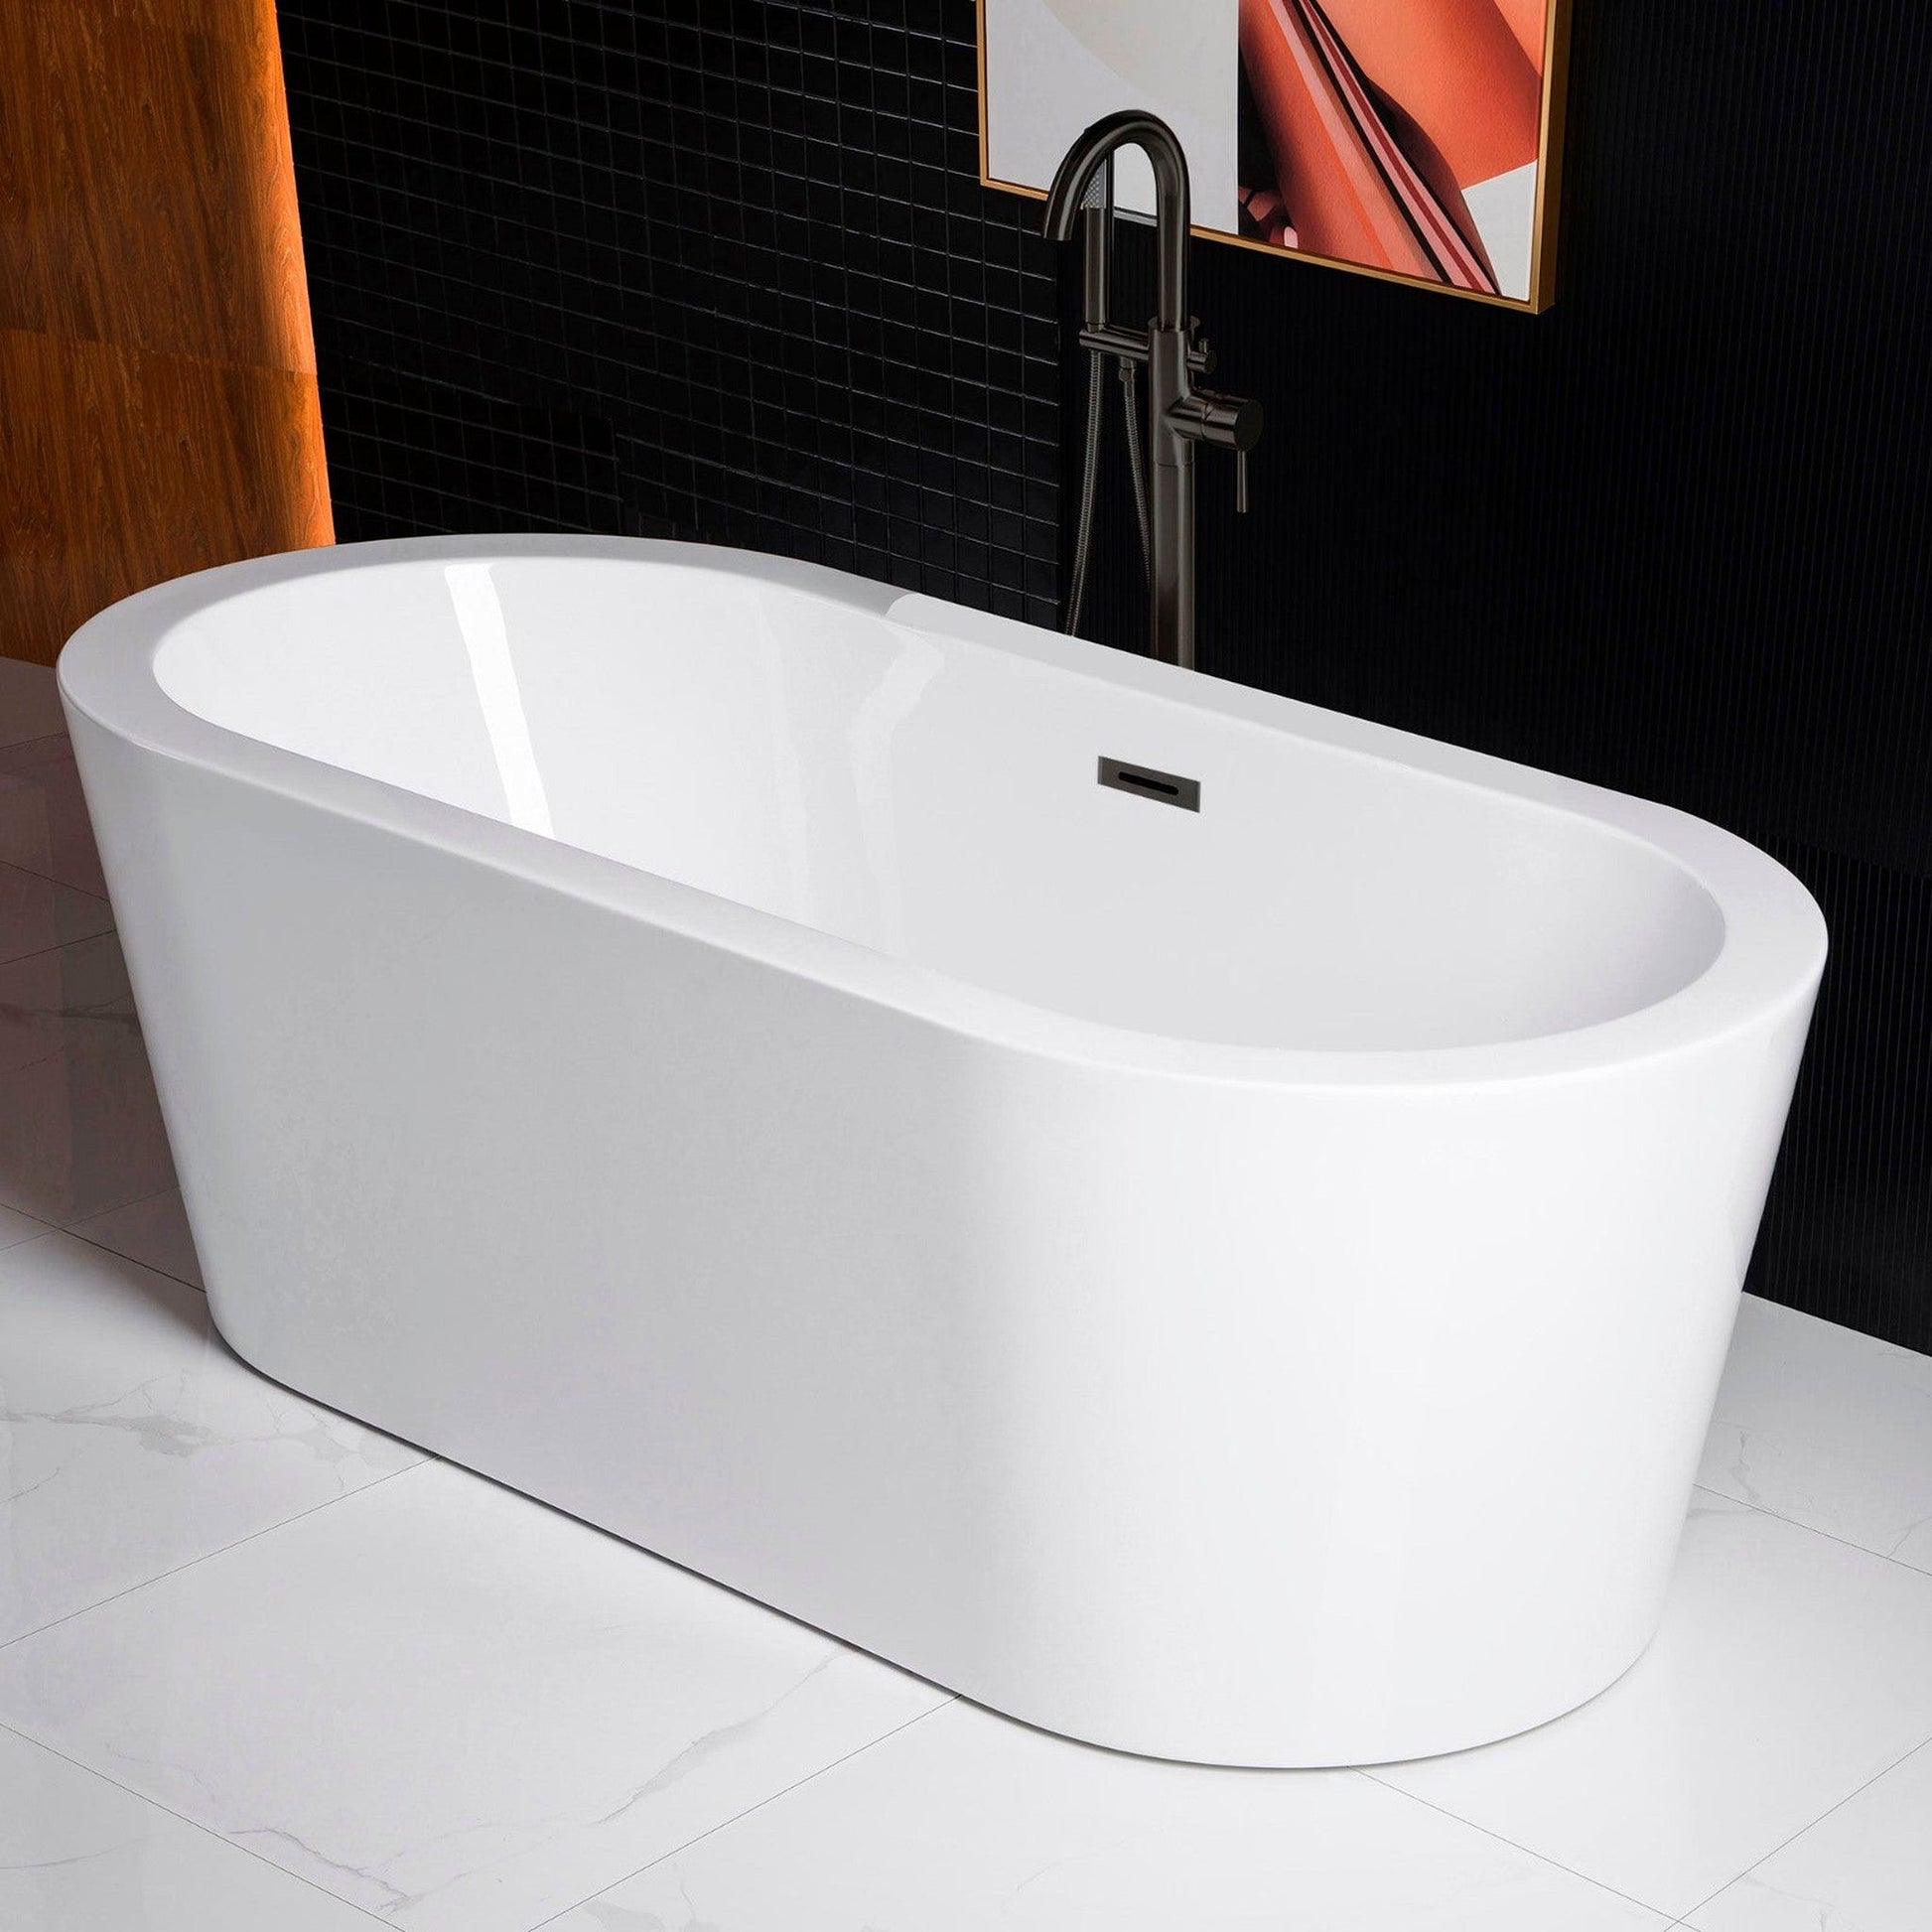 WoodBridge B0012 59" White Acrylic Freestanding Soaking Bathtub With Matte Black Drain, Overflow, F0072MBVT Tub Filler and Caddy Tray